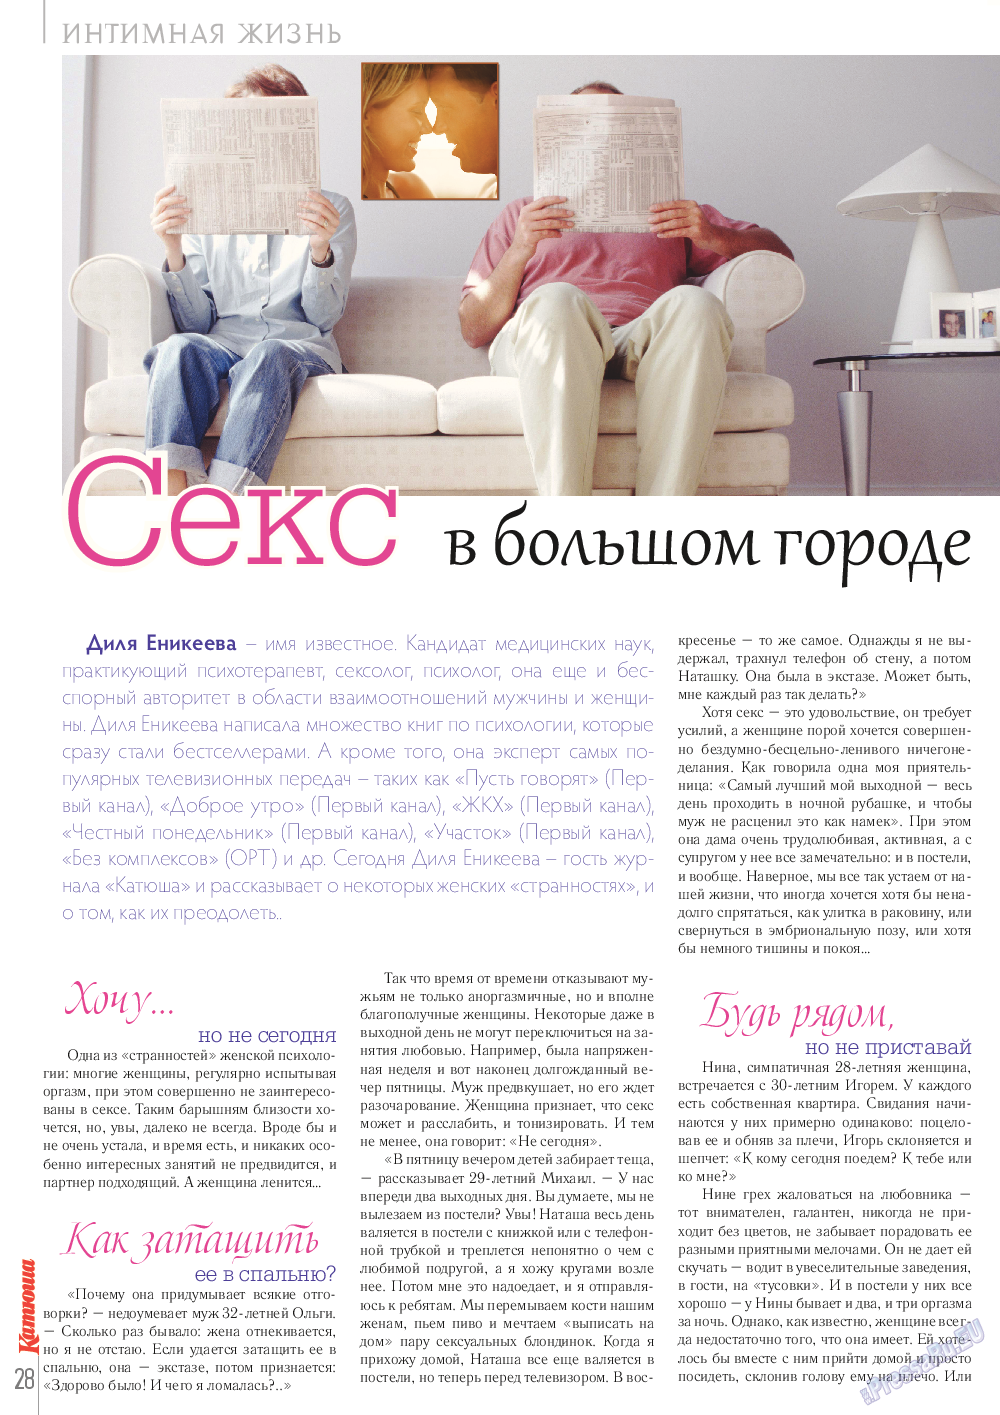 Катюша, журнал. 2014 №40 стр.28